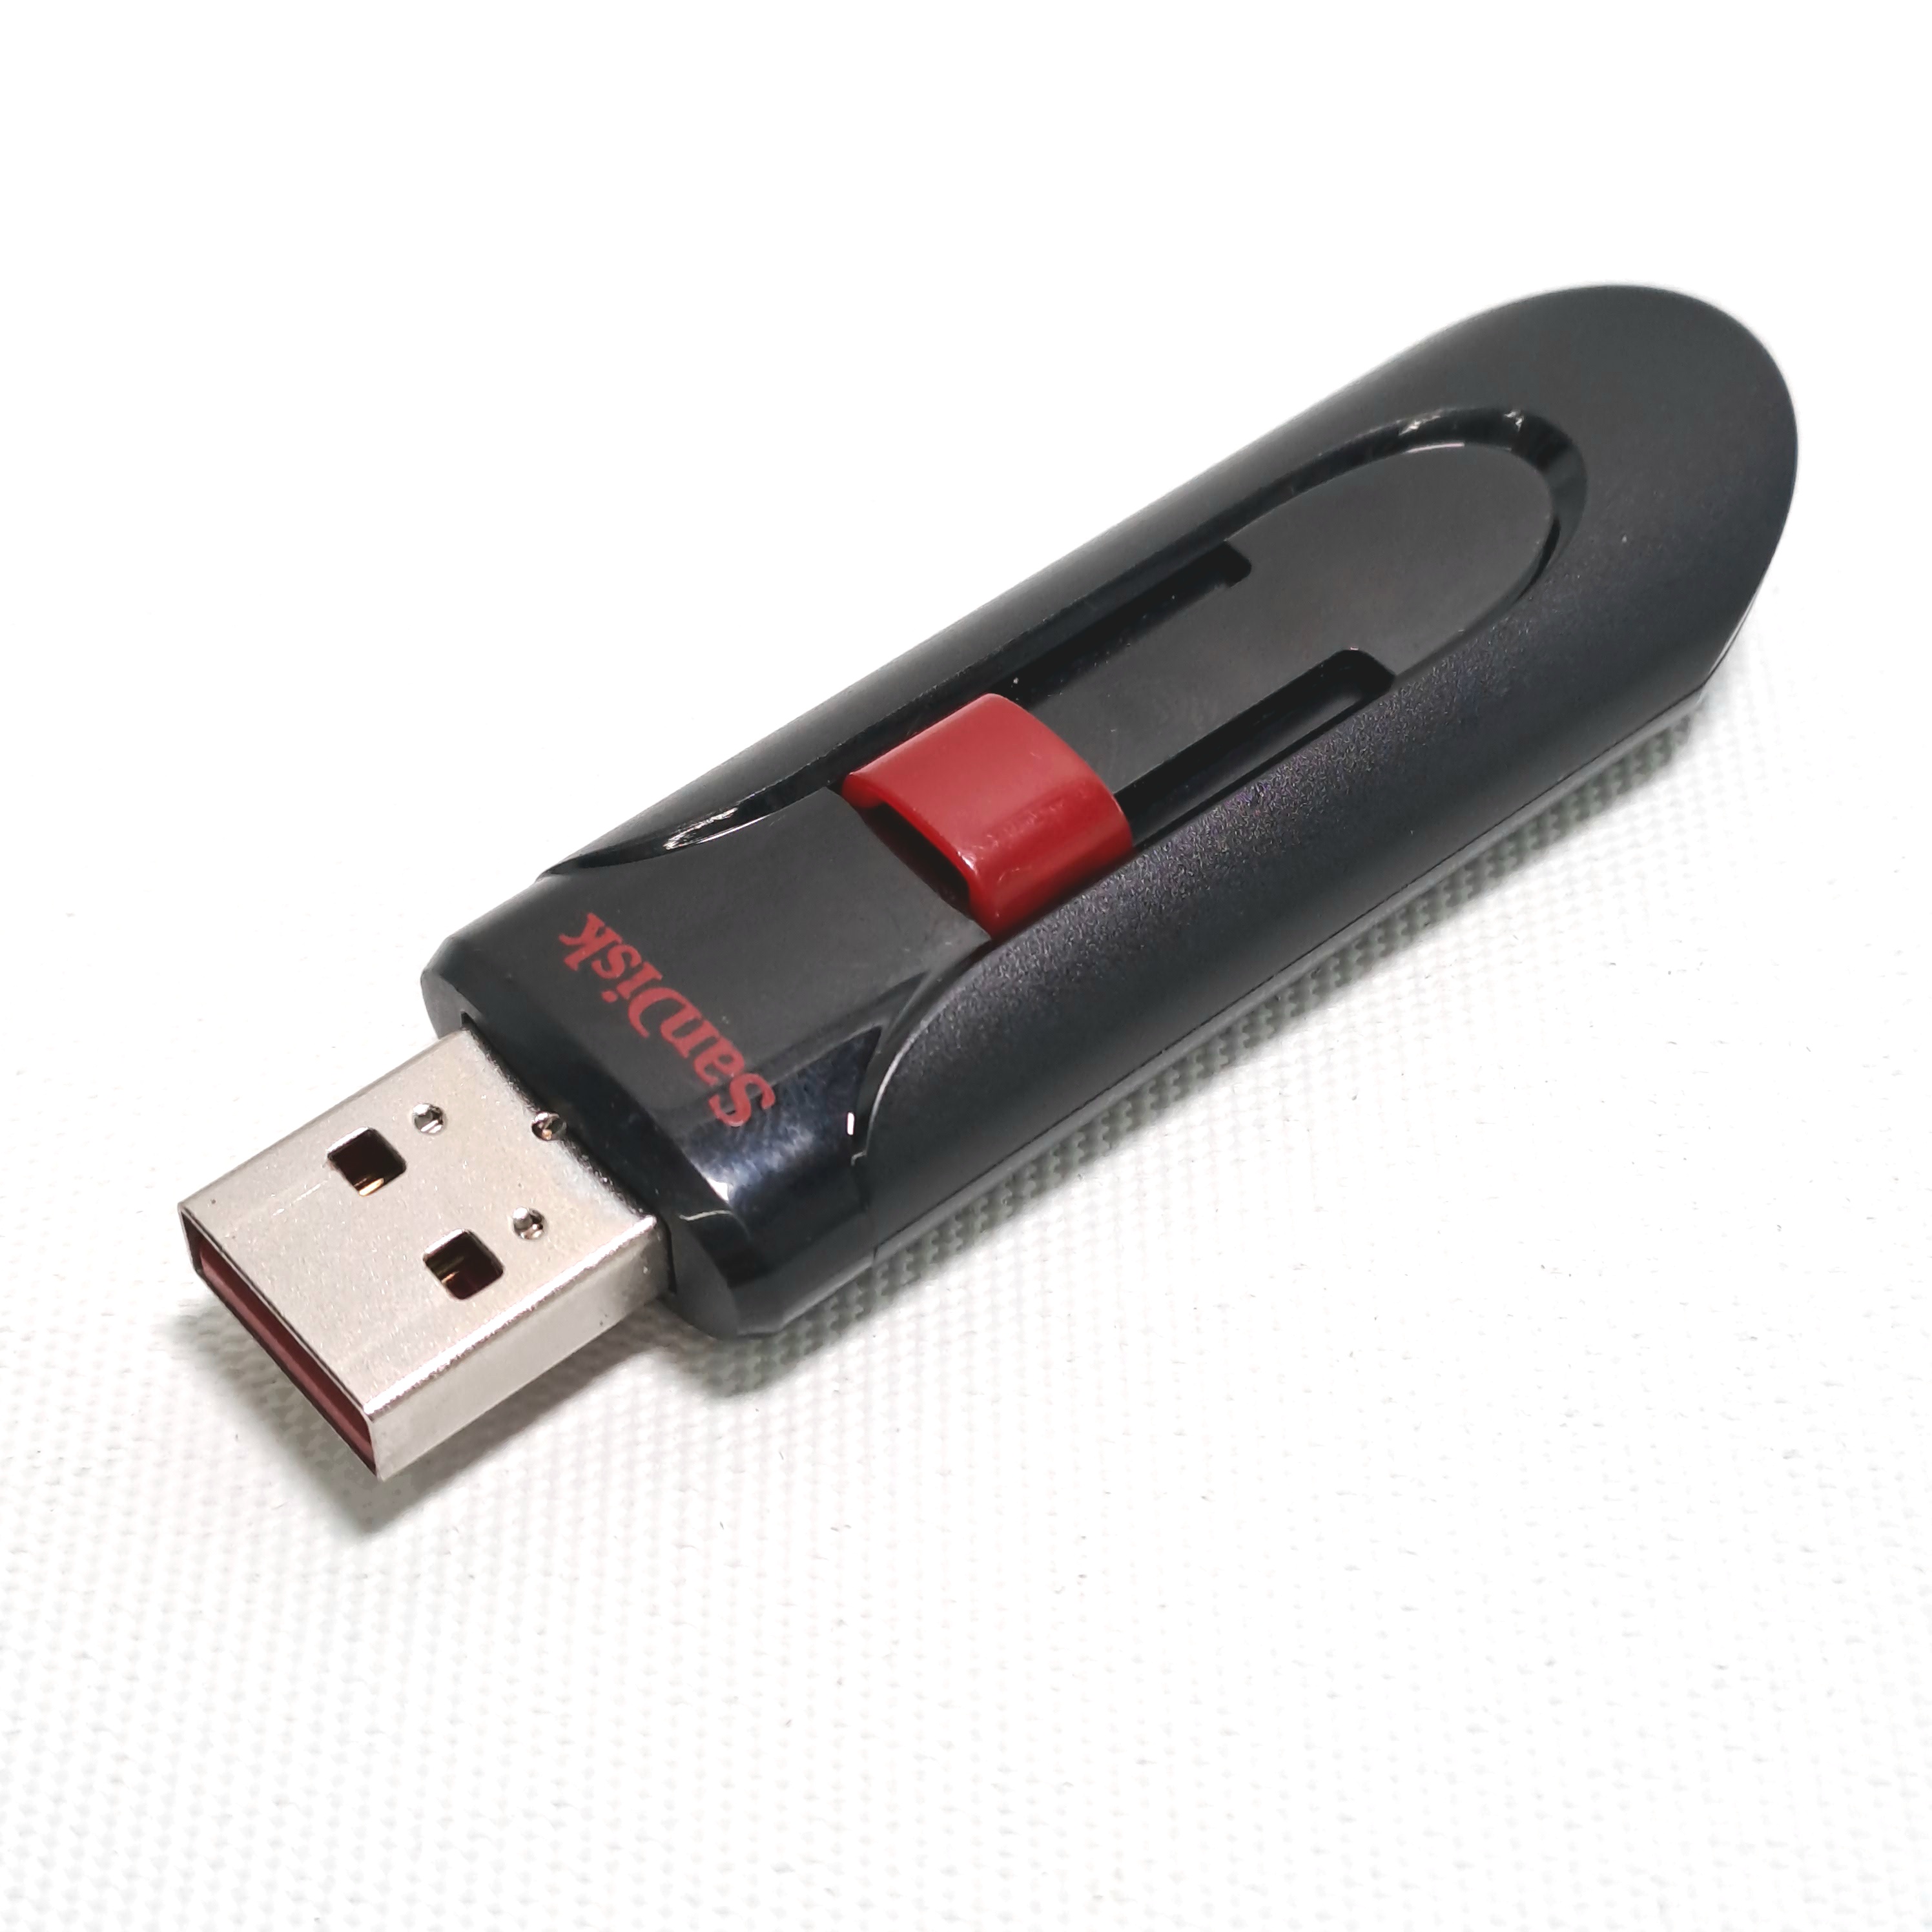 SanDisk Cruzer Glide 3.0 USB Flash Drive, CZ600 32GB